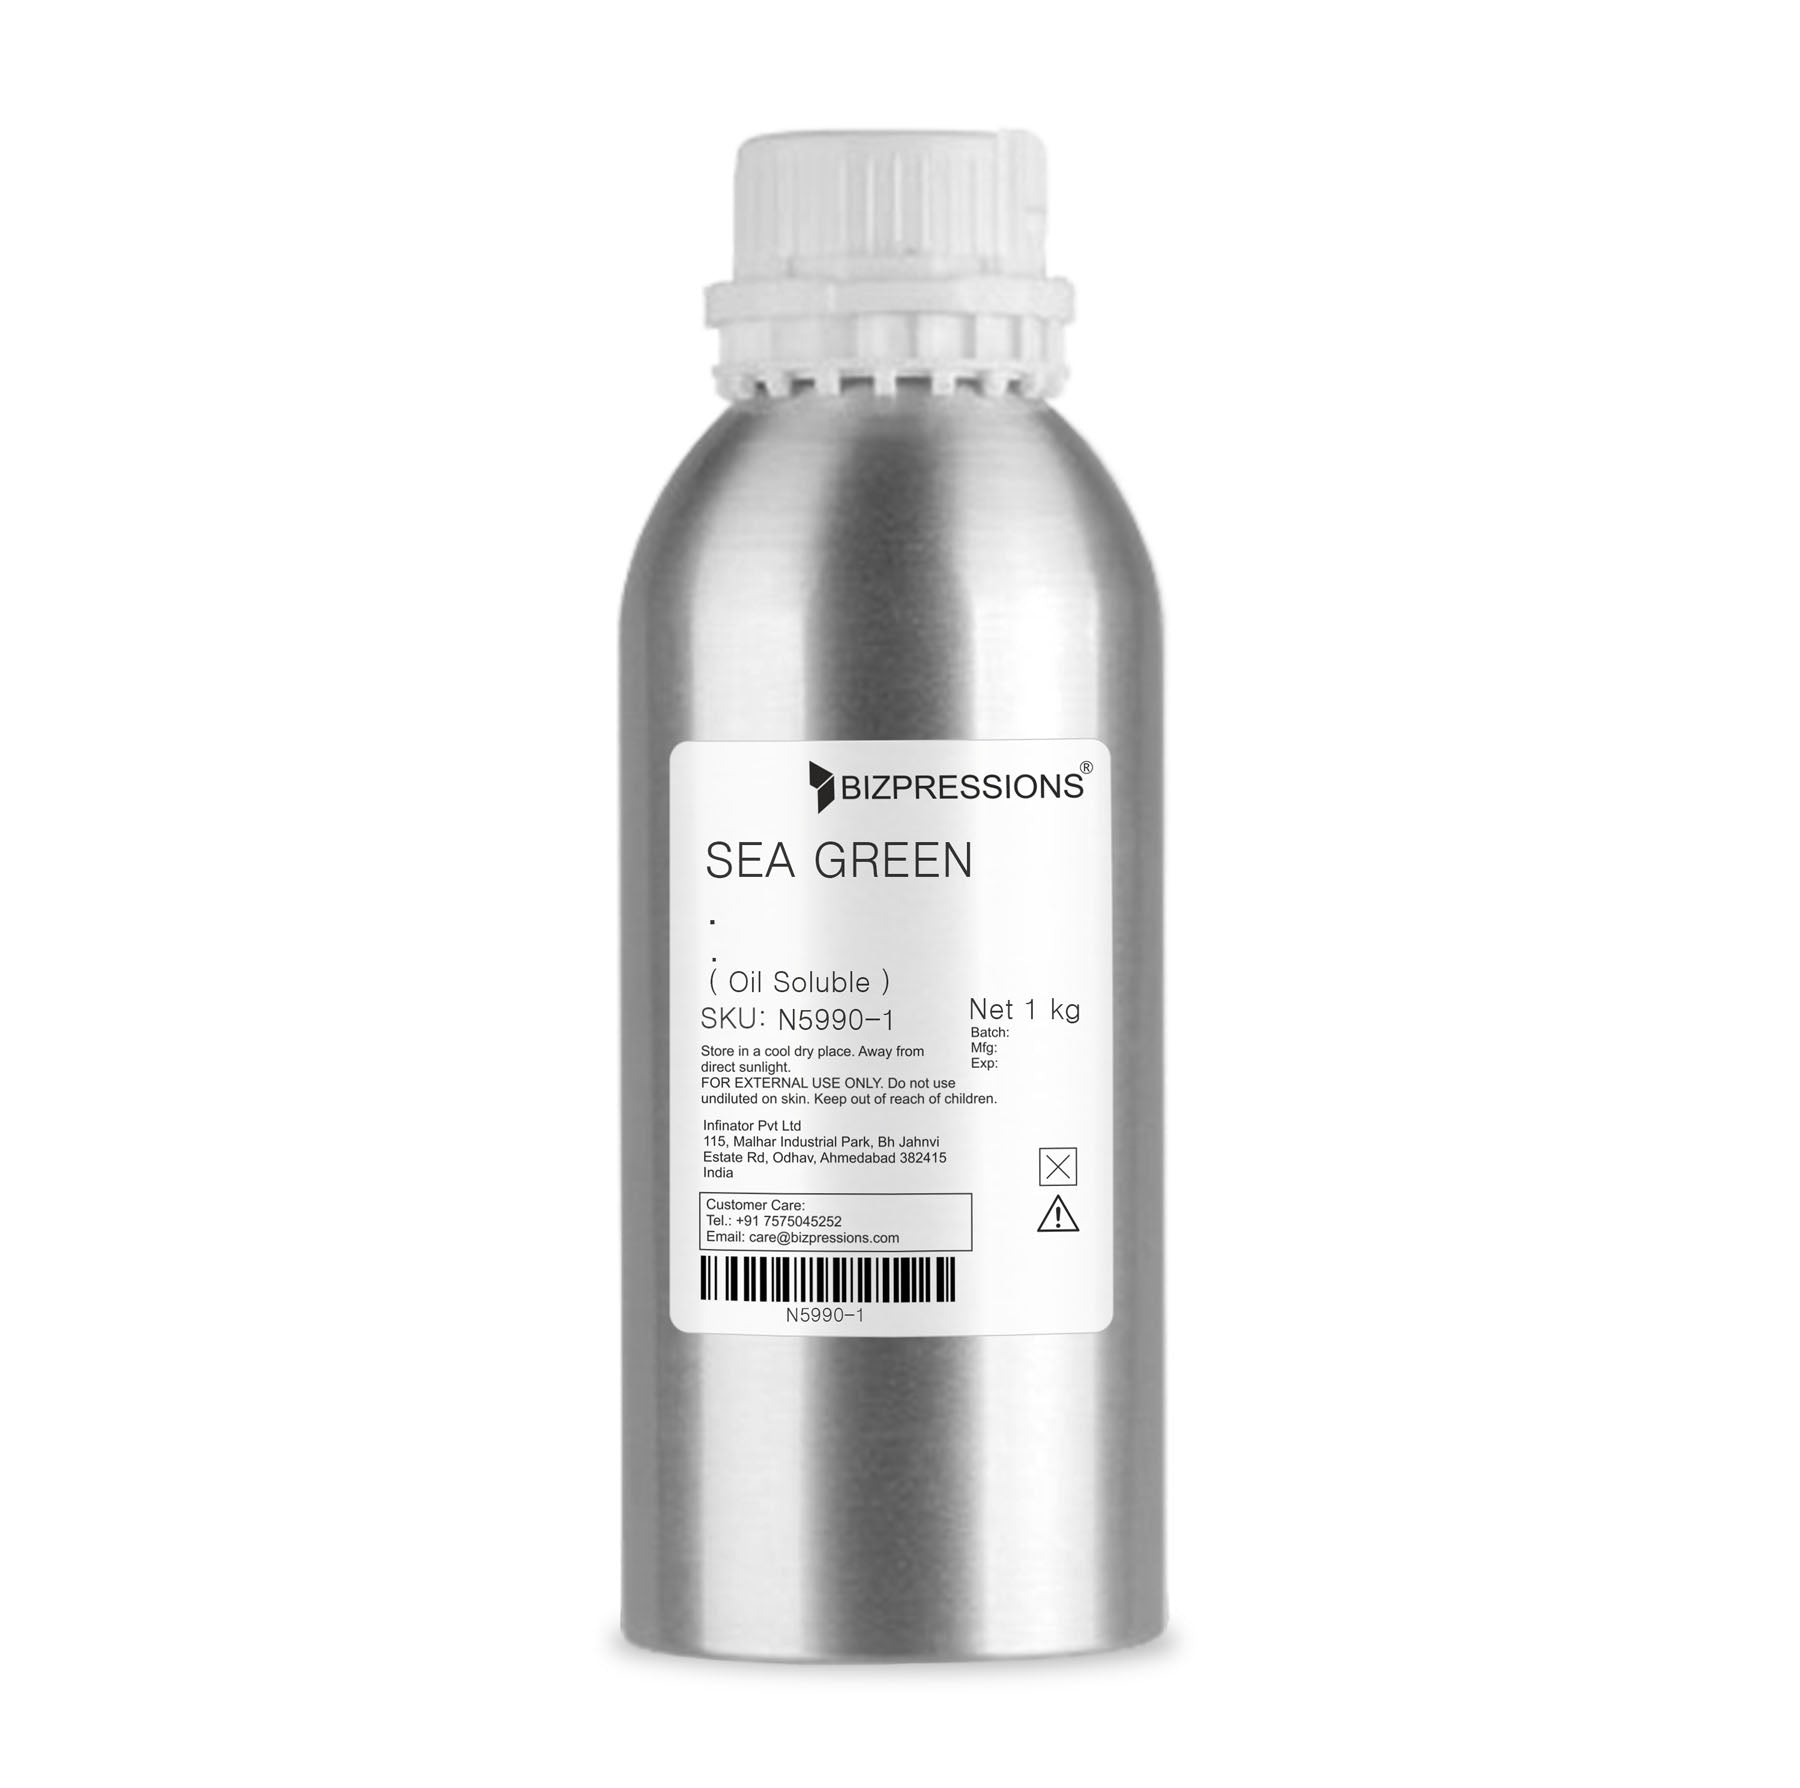 SEA GREEN - Fragrance ( Oil Soluble ) - 1 kg